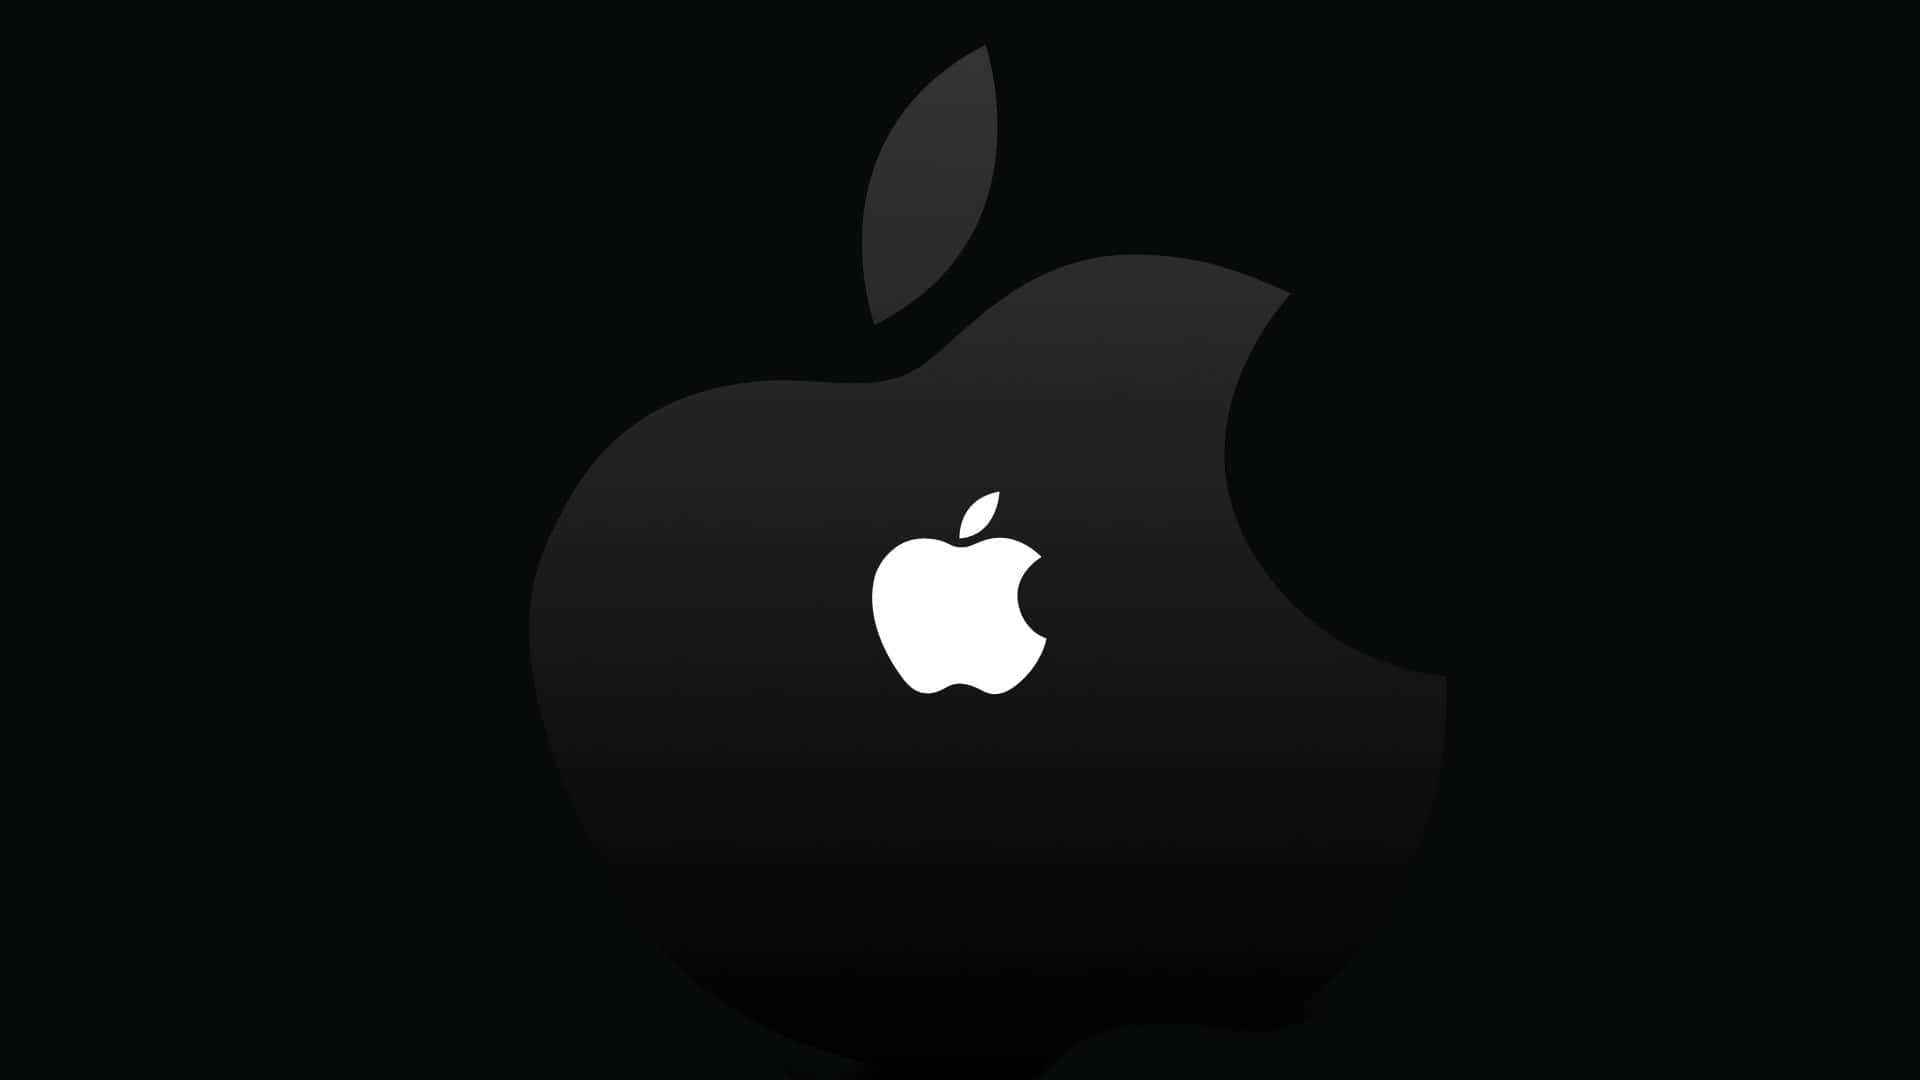 Download 1920x1080 Apple Background 1920 X 1080